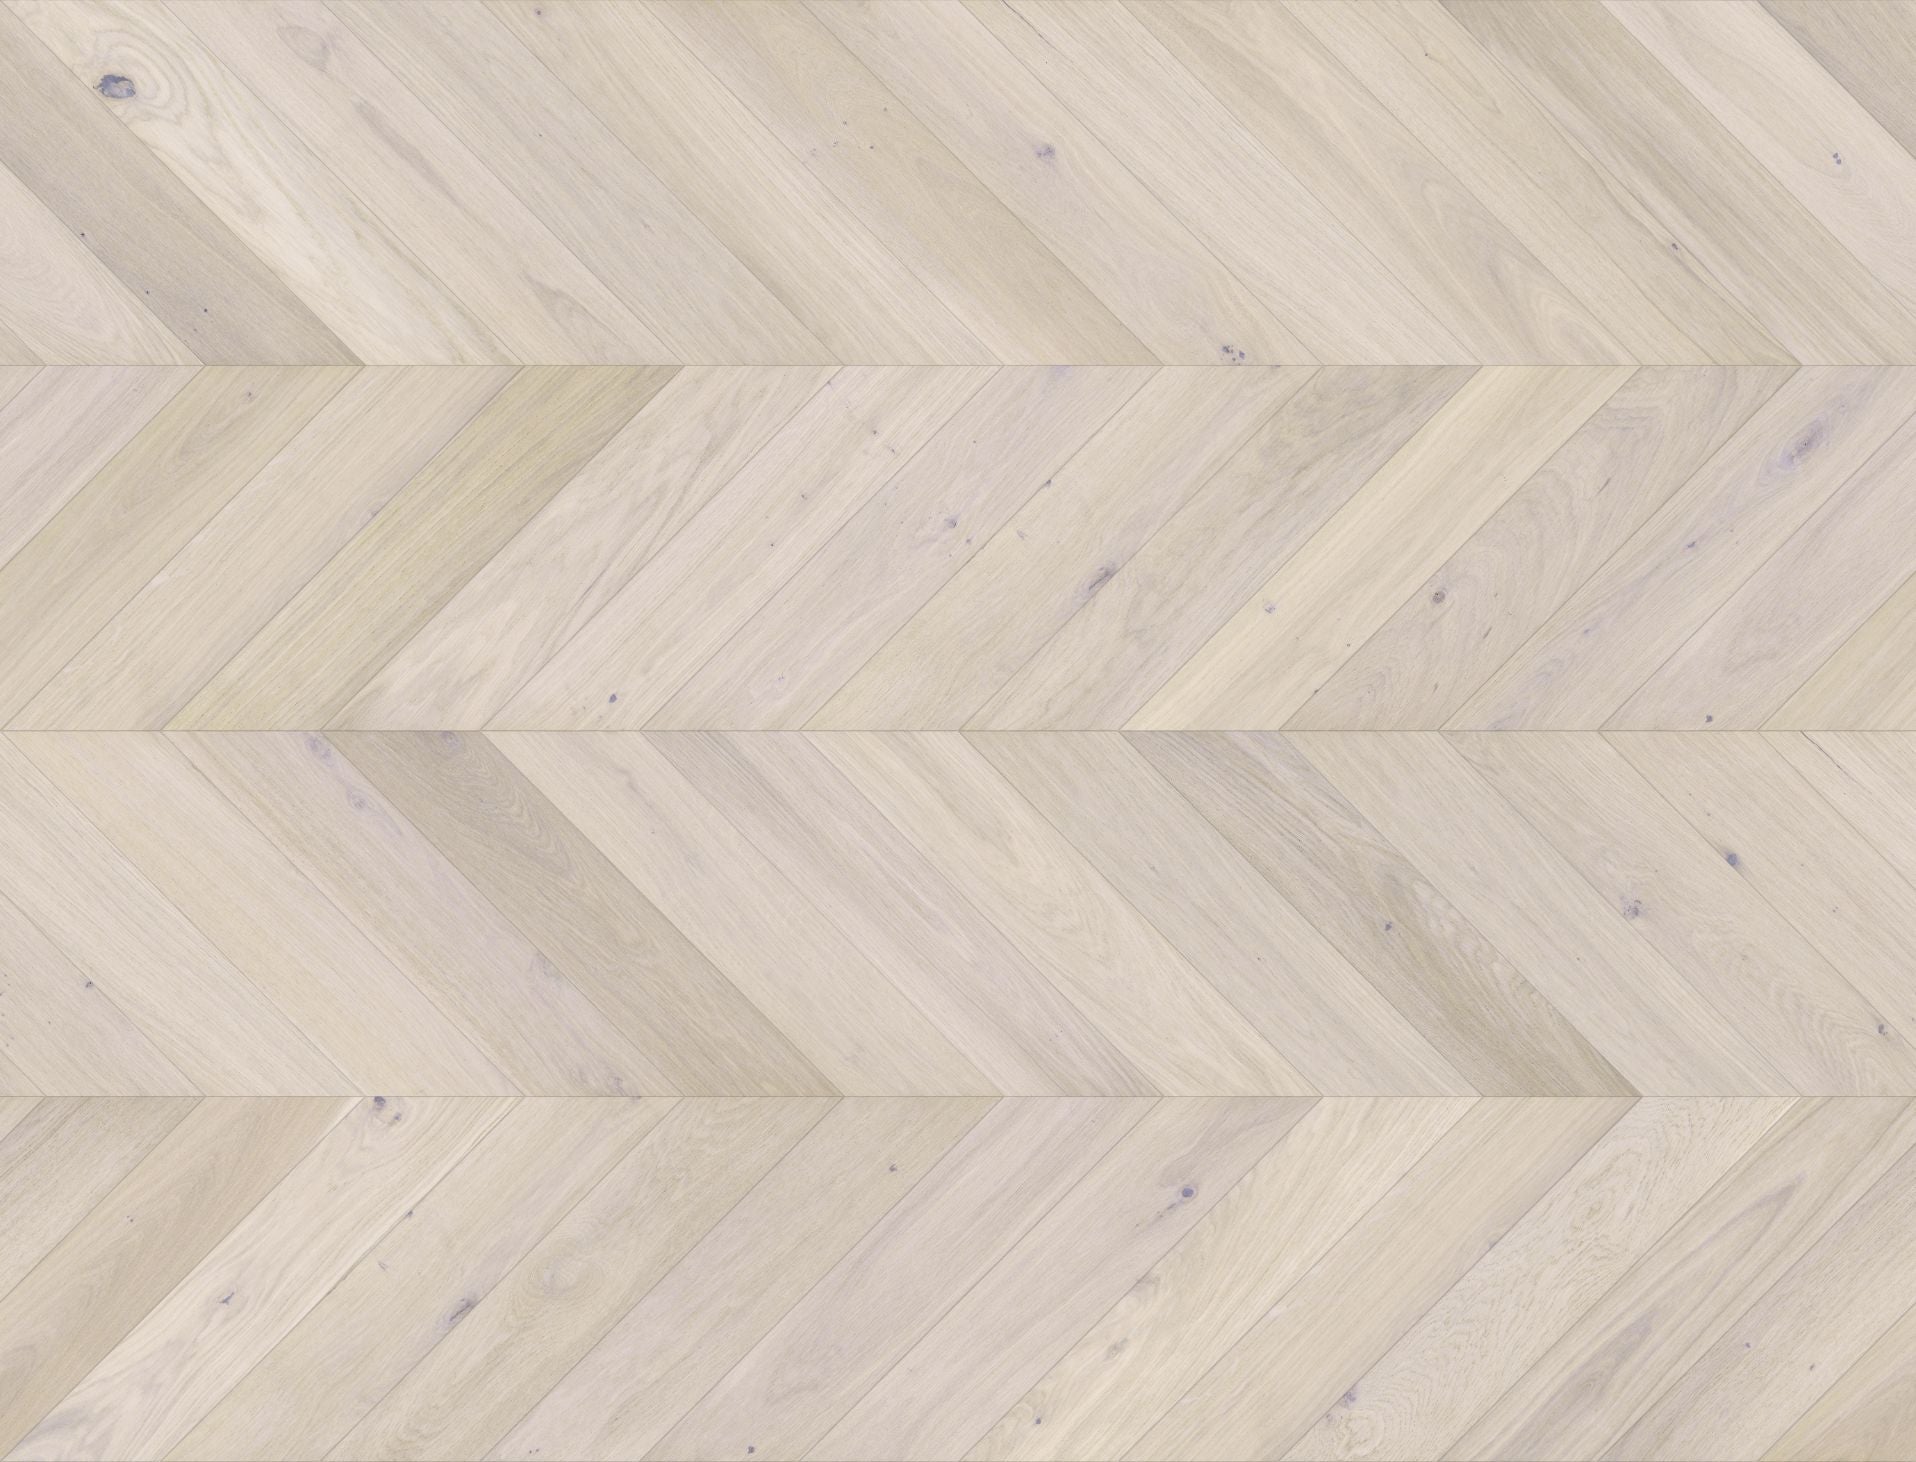 Luxury light wood flooring laid in chevron pattern